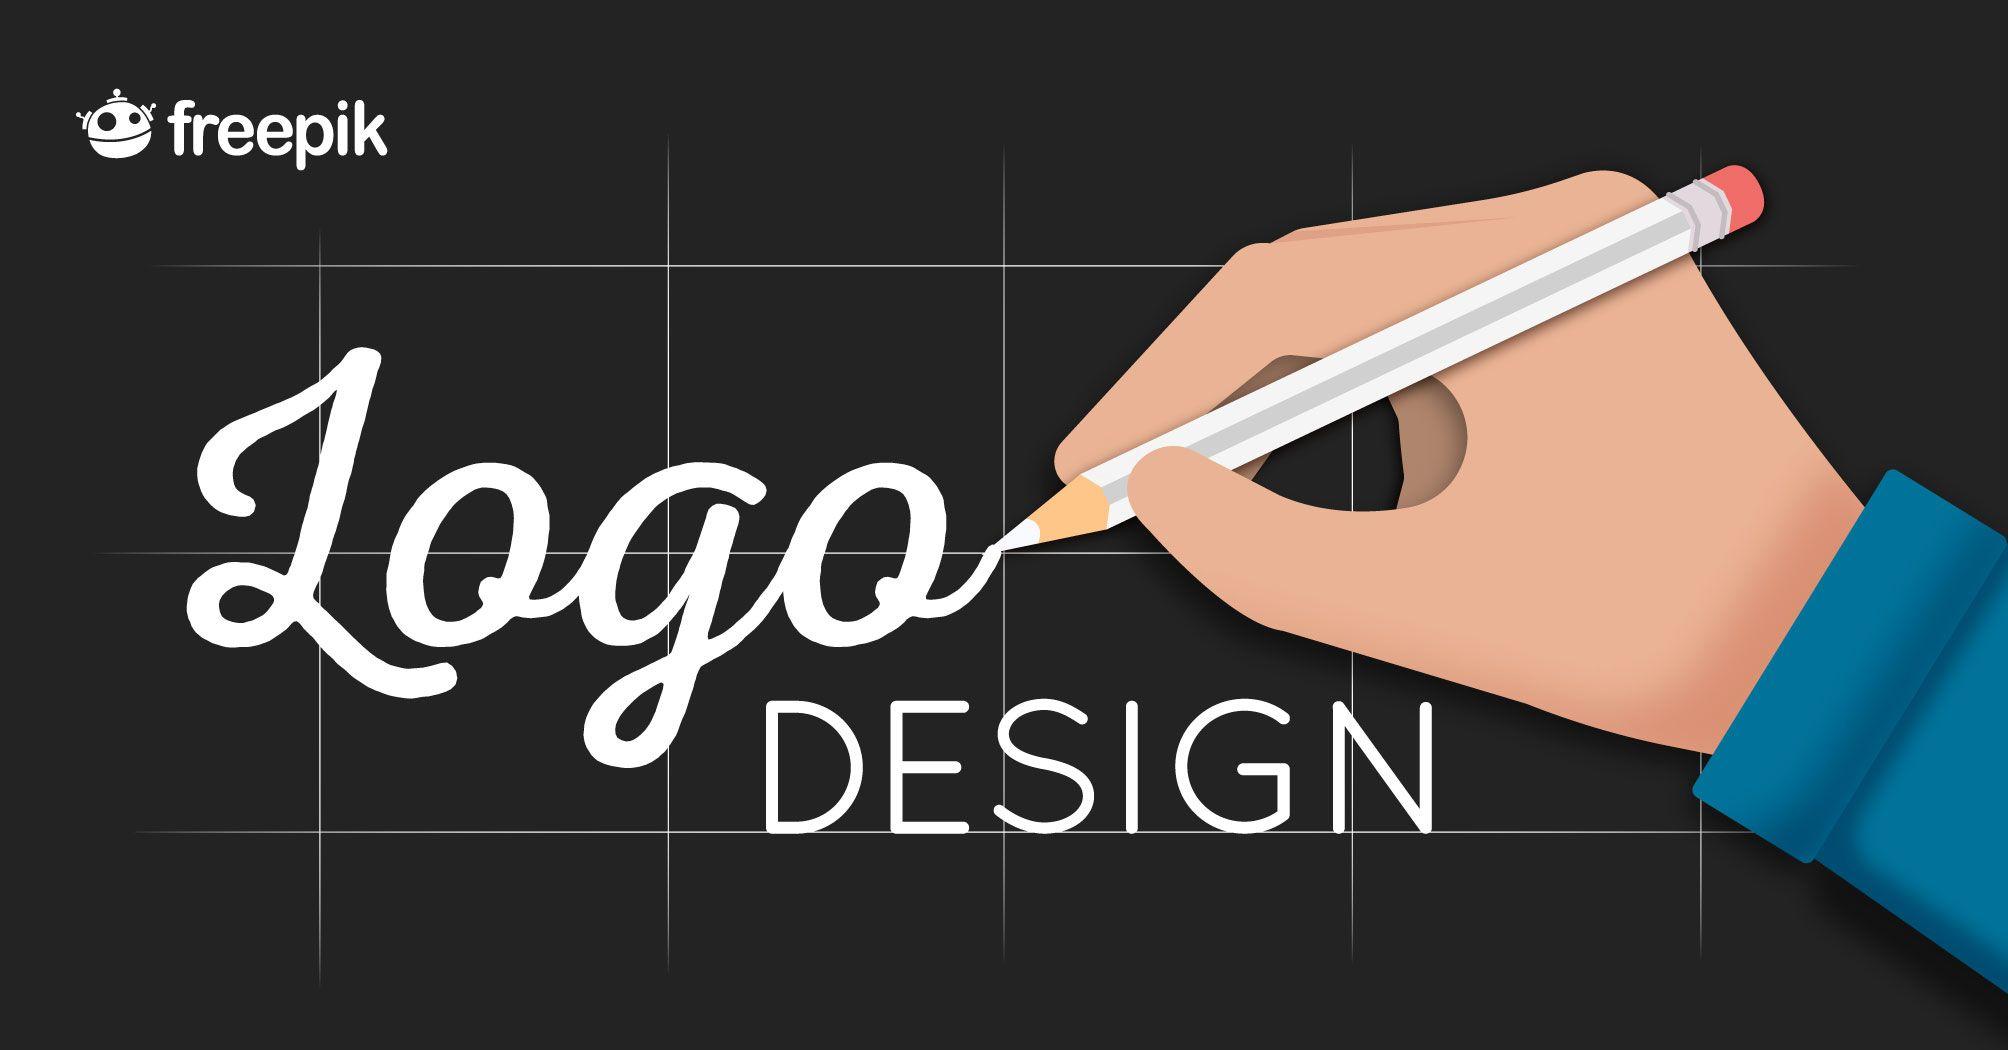 Design Your Own Business Logo - How to design your own small business logo - Freepik Blog